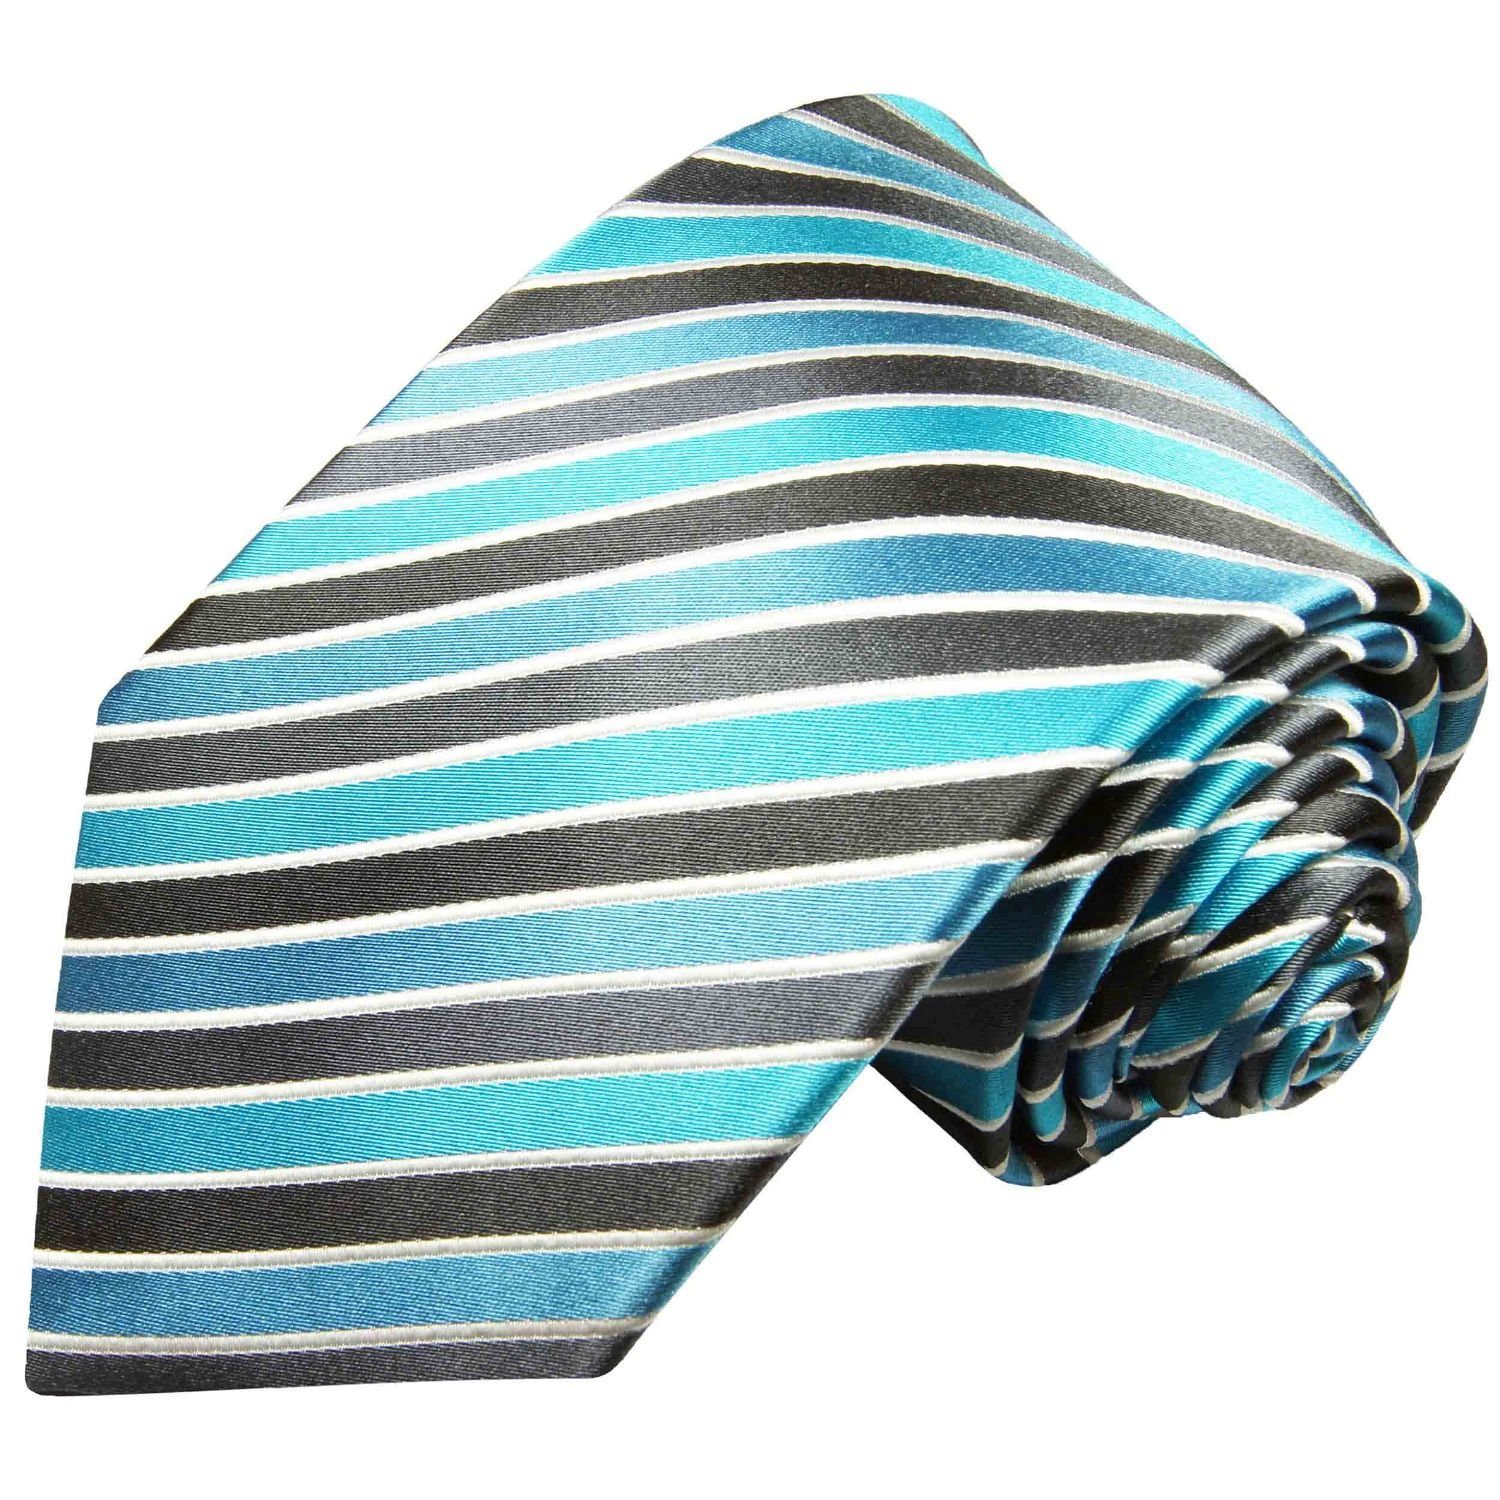 Paul Malone Krawatte Designer Seidenkrawatte Herren Schlips modern gestreift 100% Seide Schmal (6cm), türkis grau 250